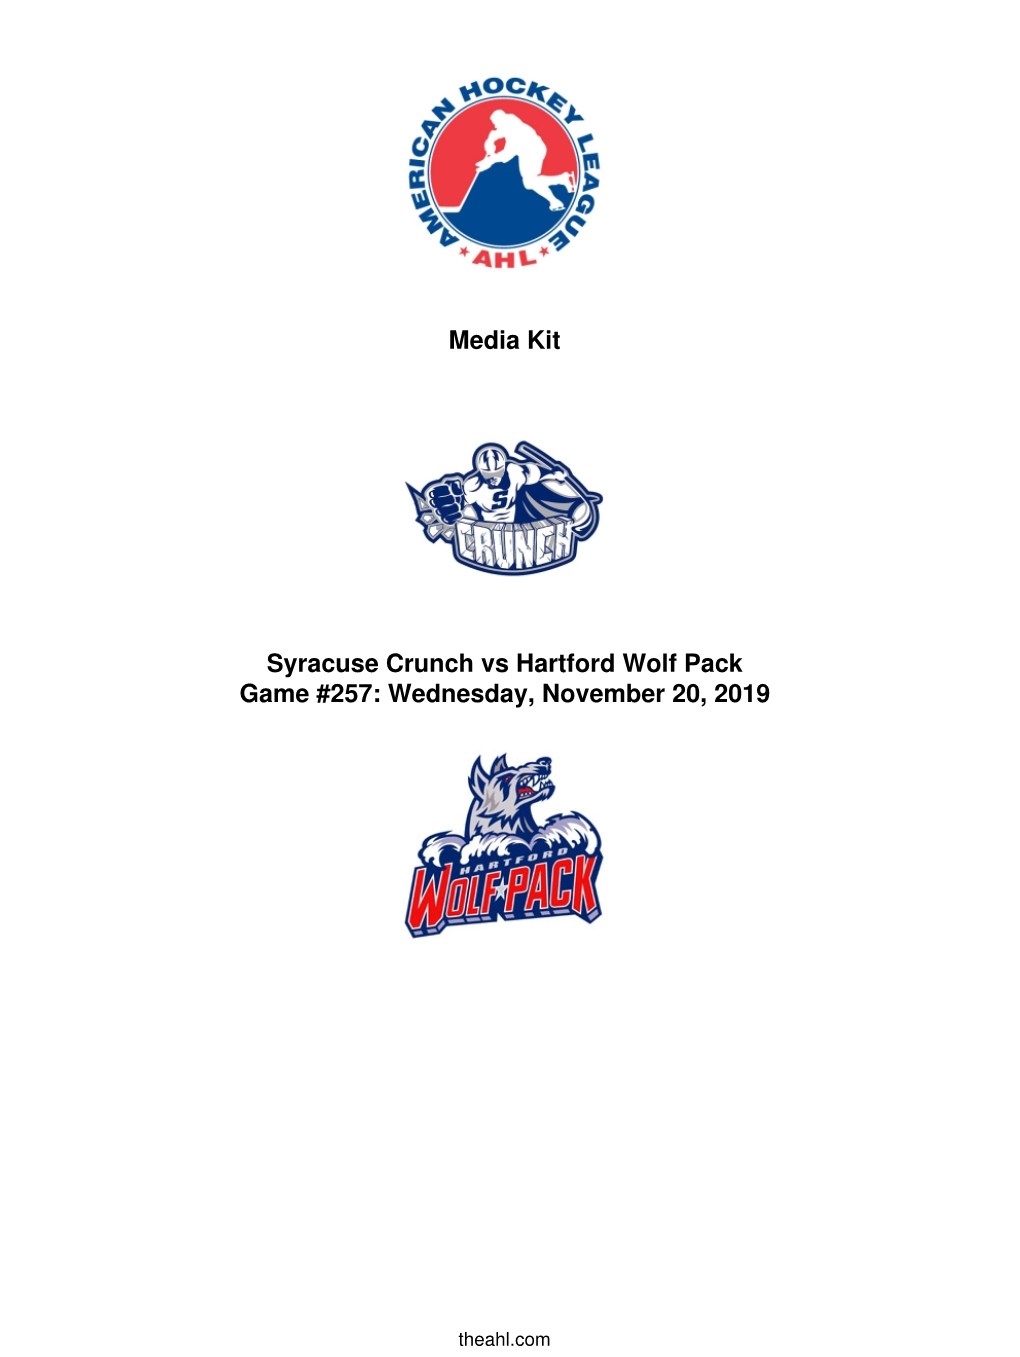 Media Kit Syracuse Crunch Vs Hartford Wolf Pack Game #257